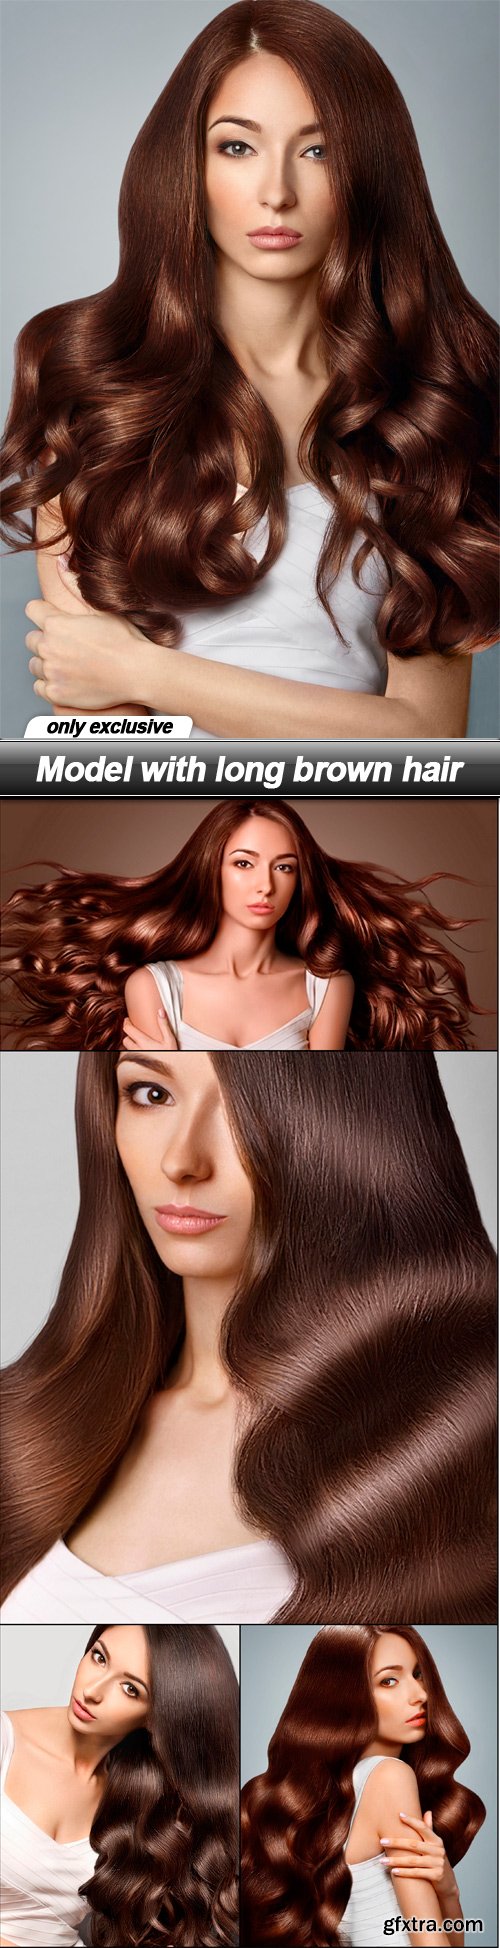 Model with long brown hair - 5 UHQ JPEG